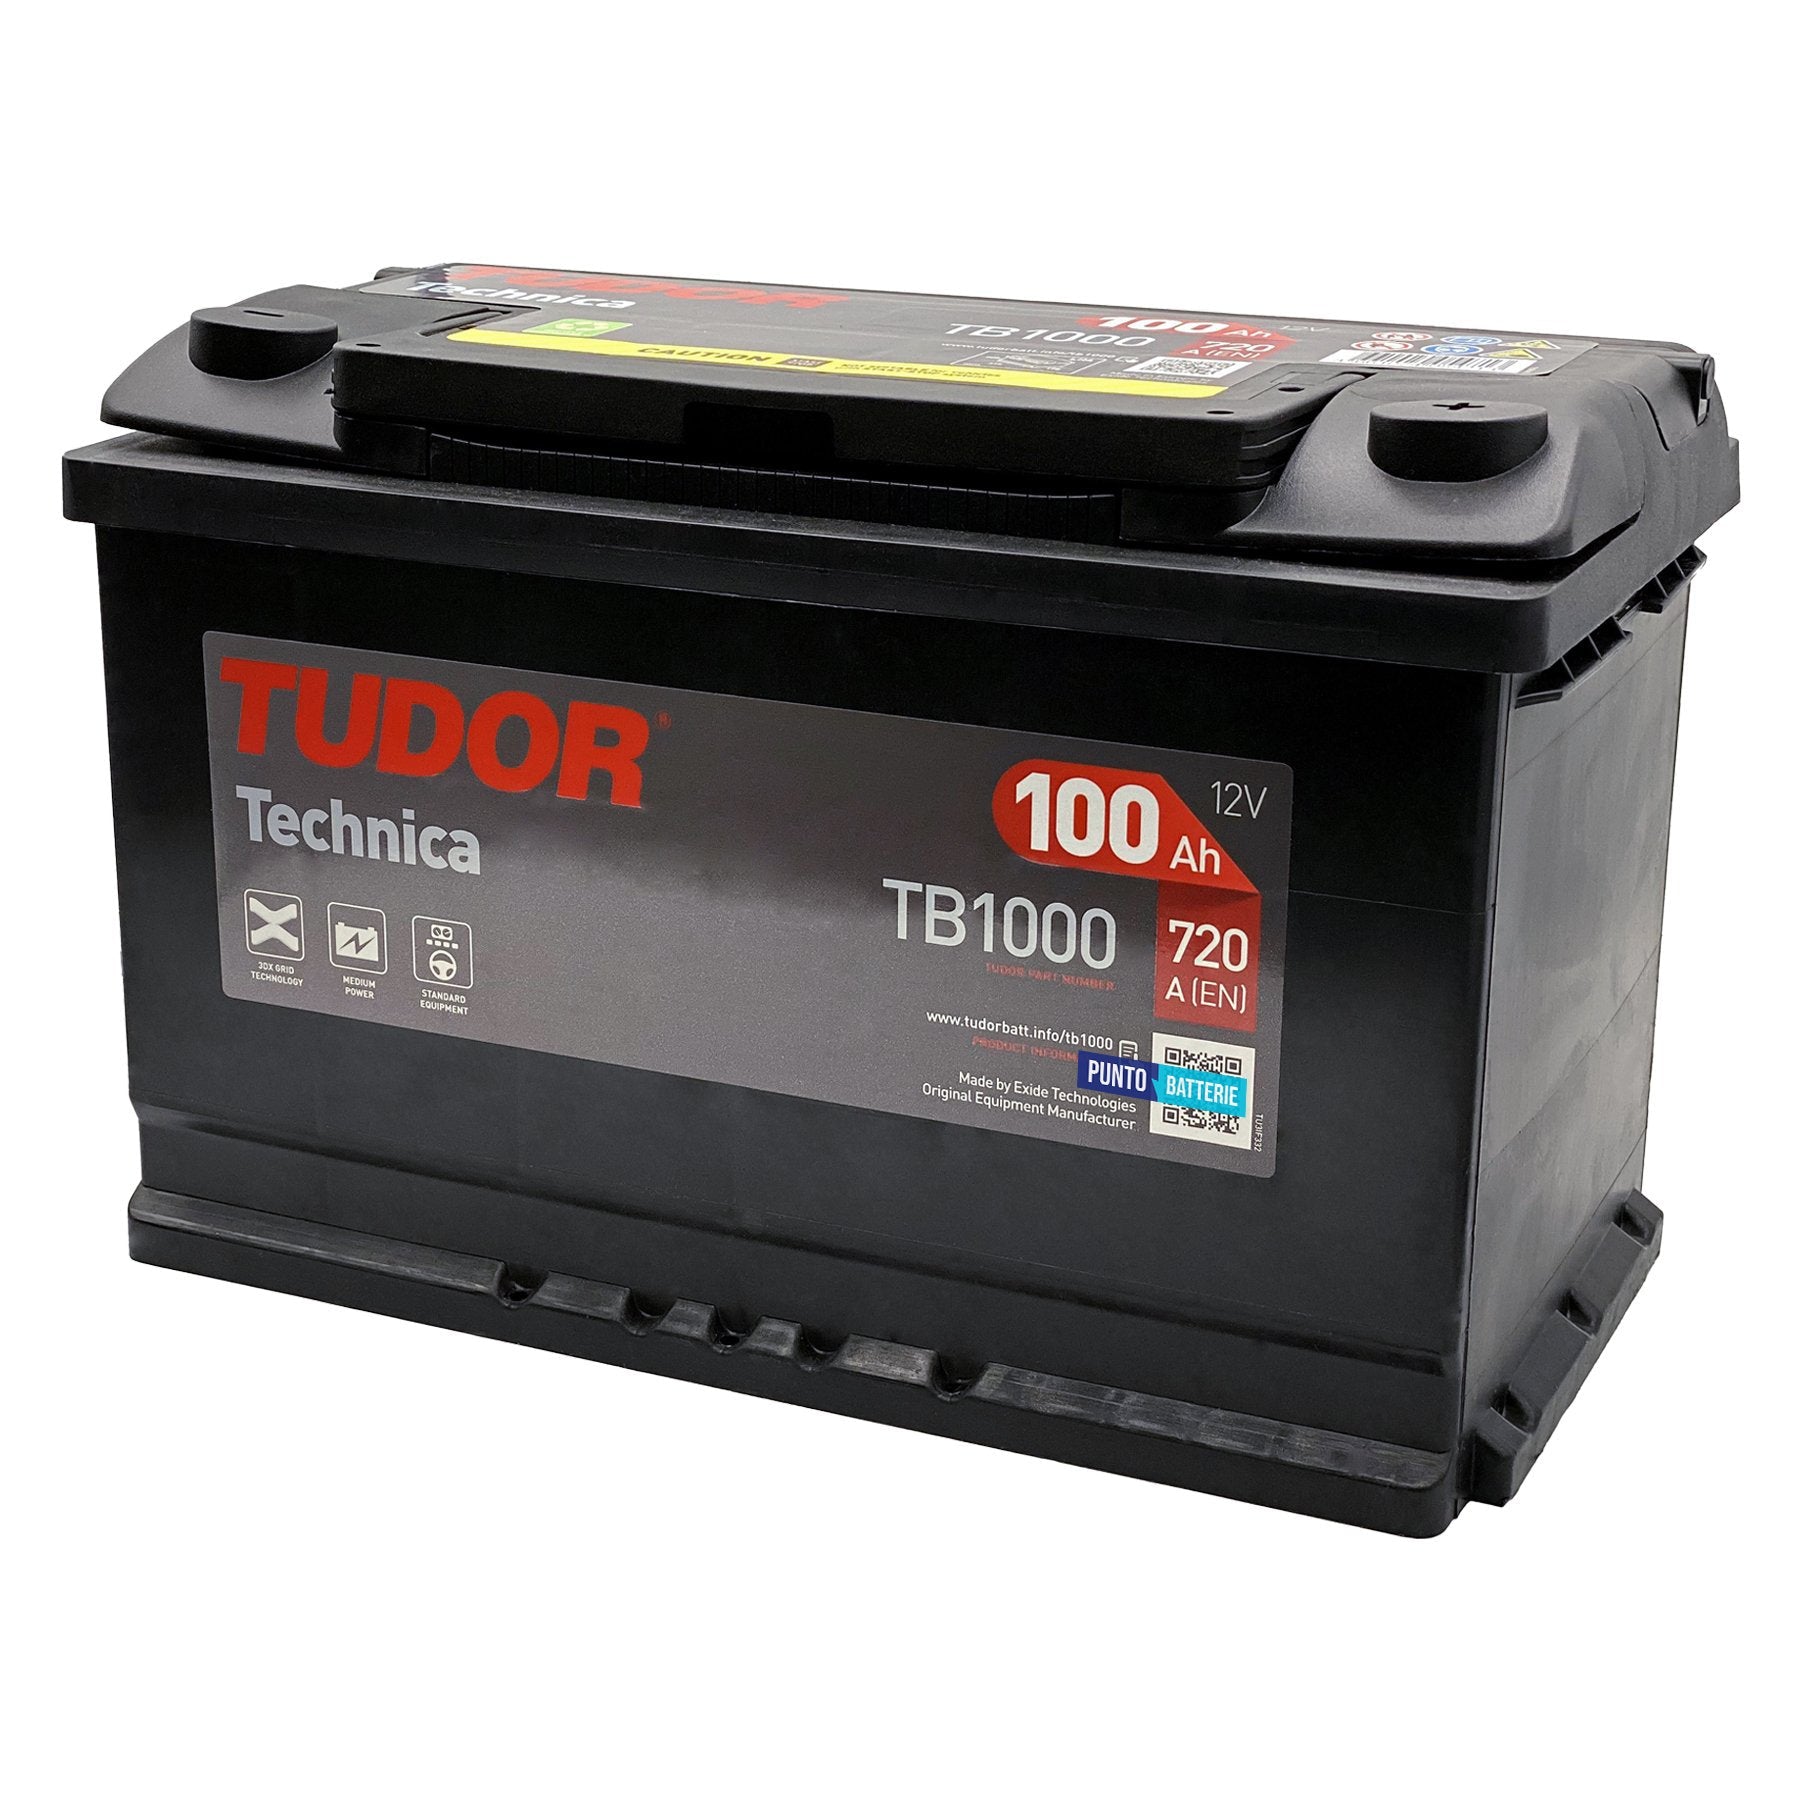 Batteria Tudor TB1000 - Technica (12V, 100Ah, 720A) - Puntobatterie